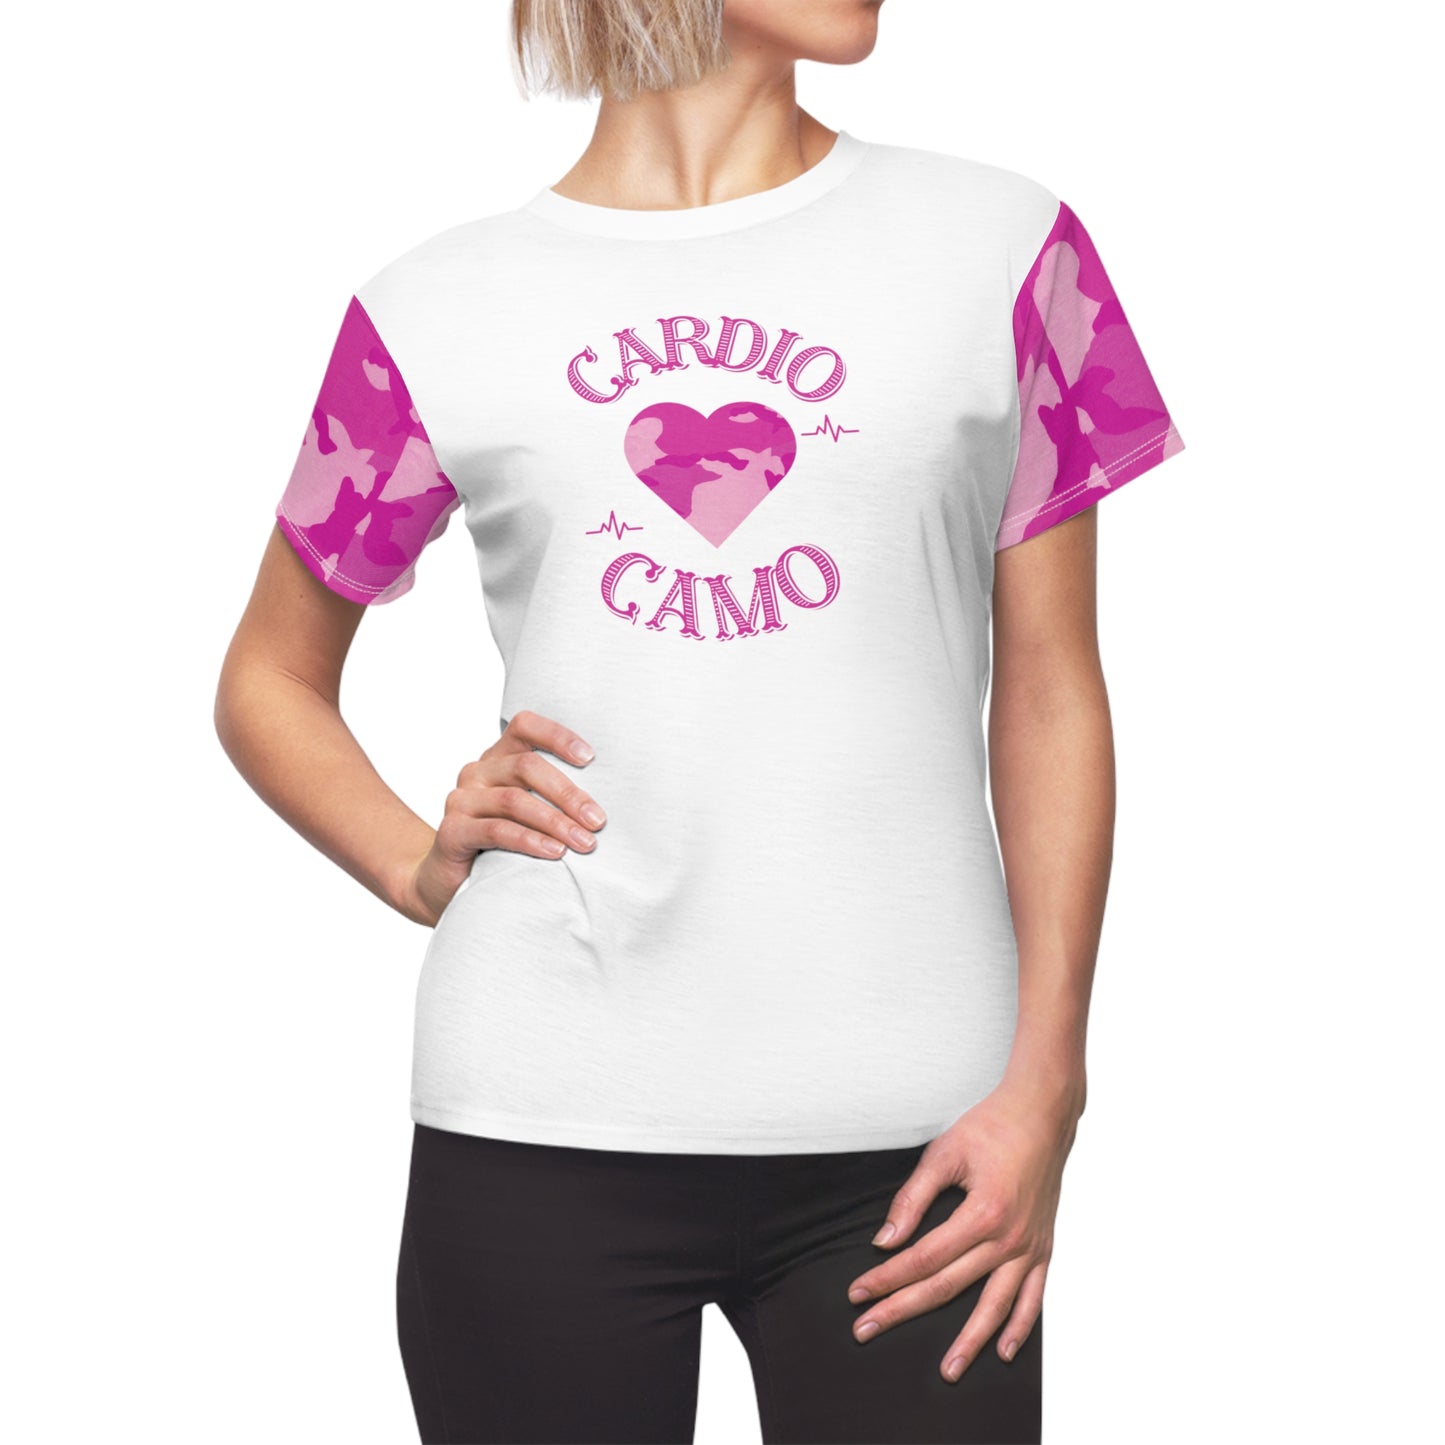 Cardio Camo - Women's Cut & Sew Tee